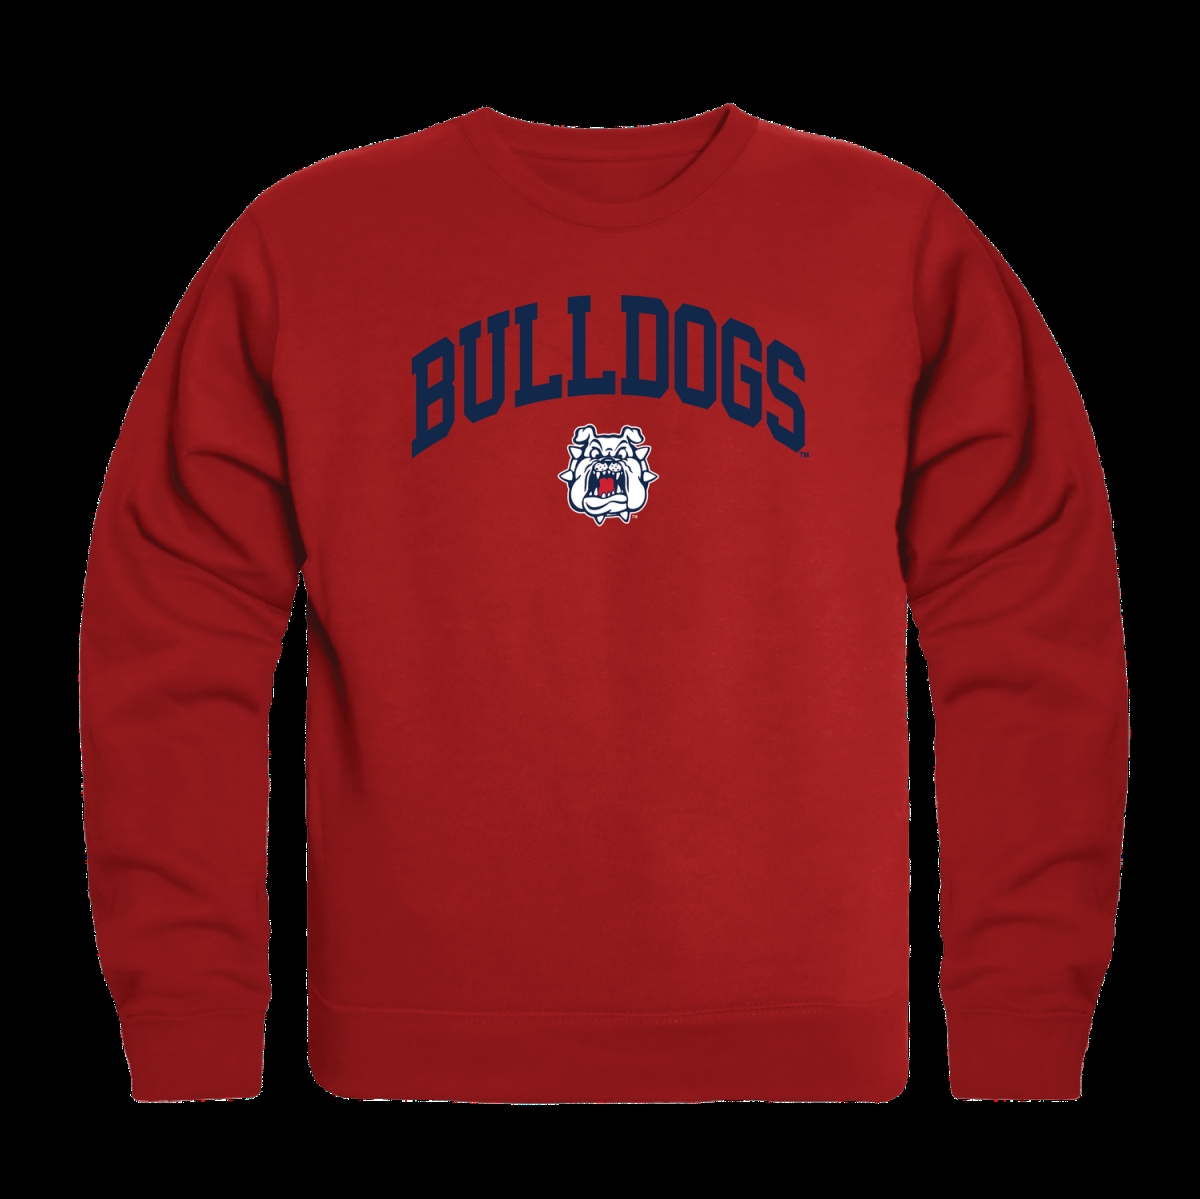 541-169-RD2-02 California State University, Fresno Bulldogs Campus Crewneck Sweatshirt, Red - Medium -  W Republic